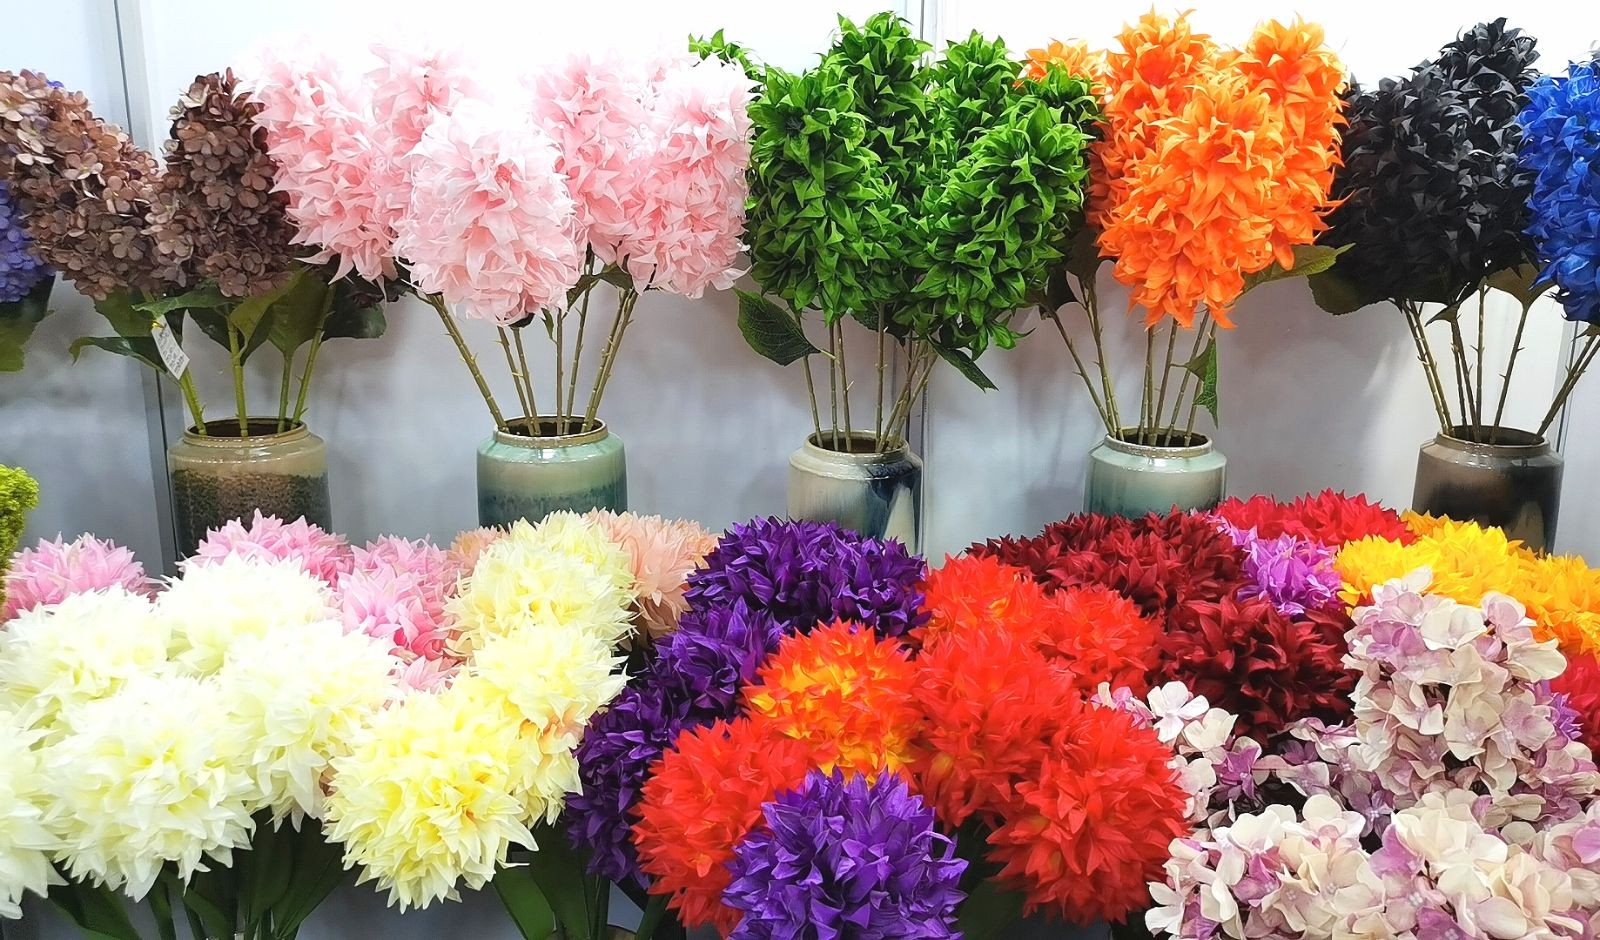 COTV直播-天津市柏兴绢花有限公司专业生产经营销售各种仿真花系列产品，欢迎大家光临！